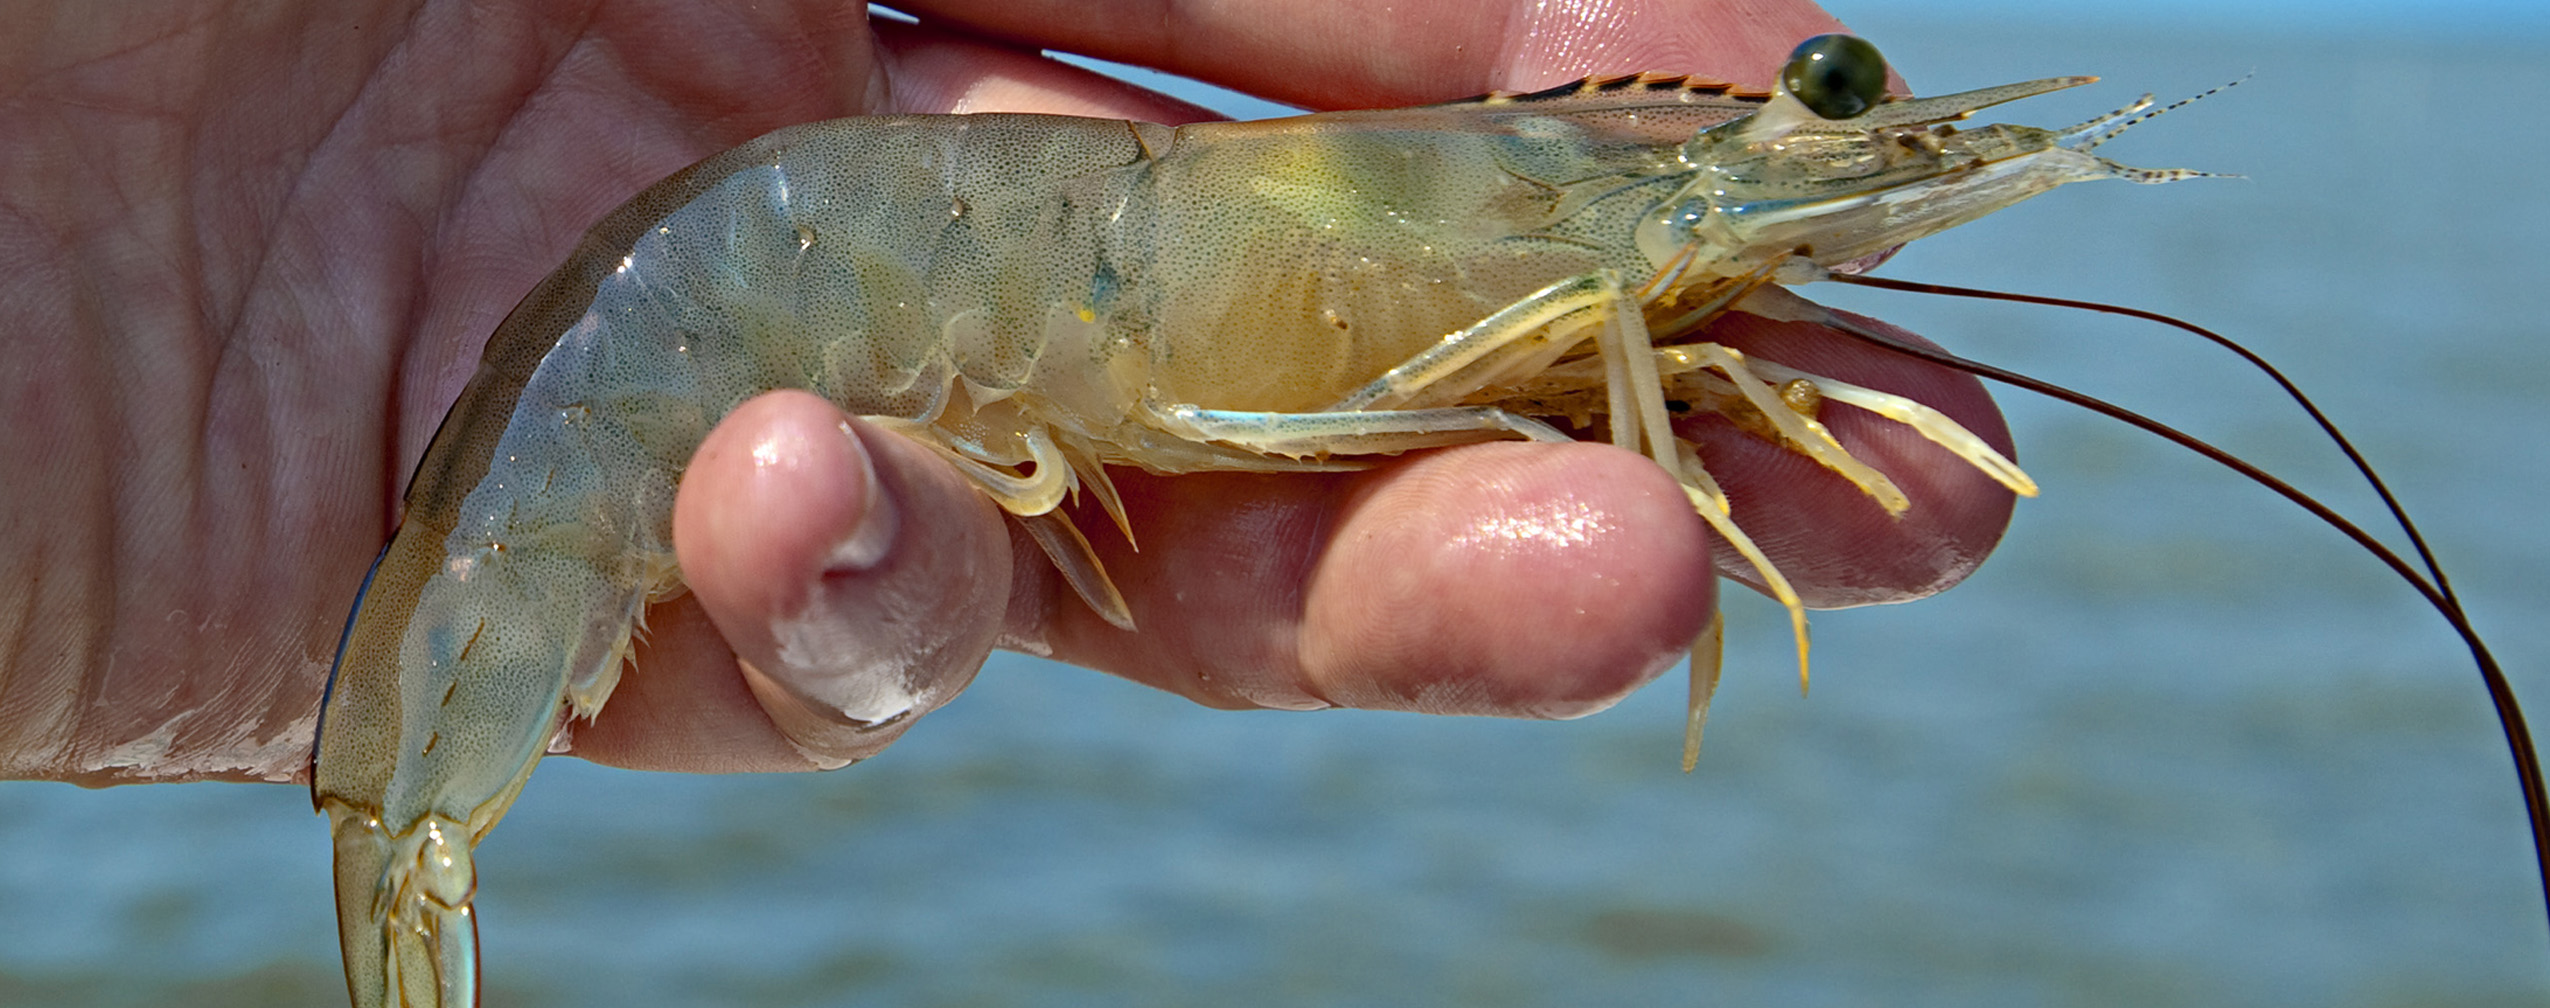 Shrimp in baitwells take special care